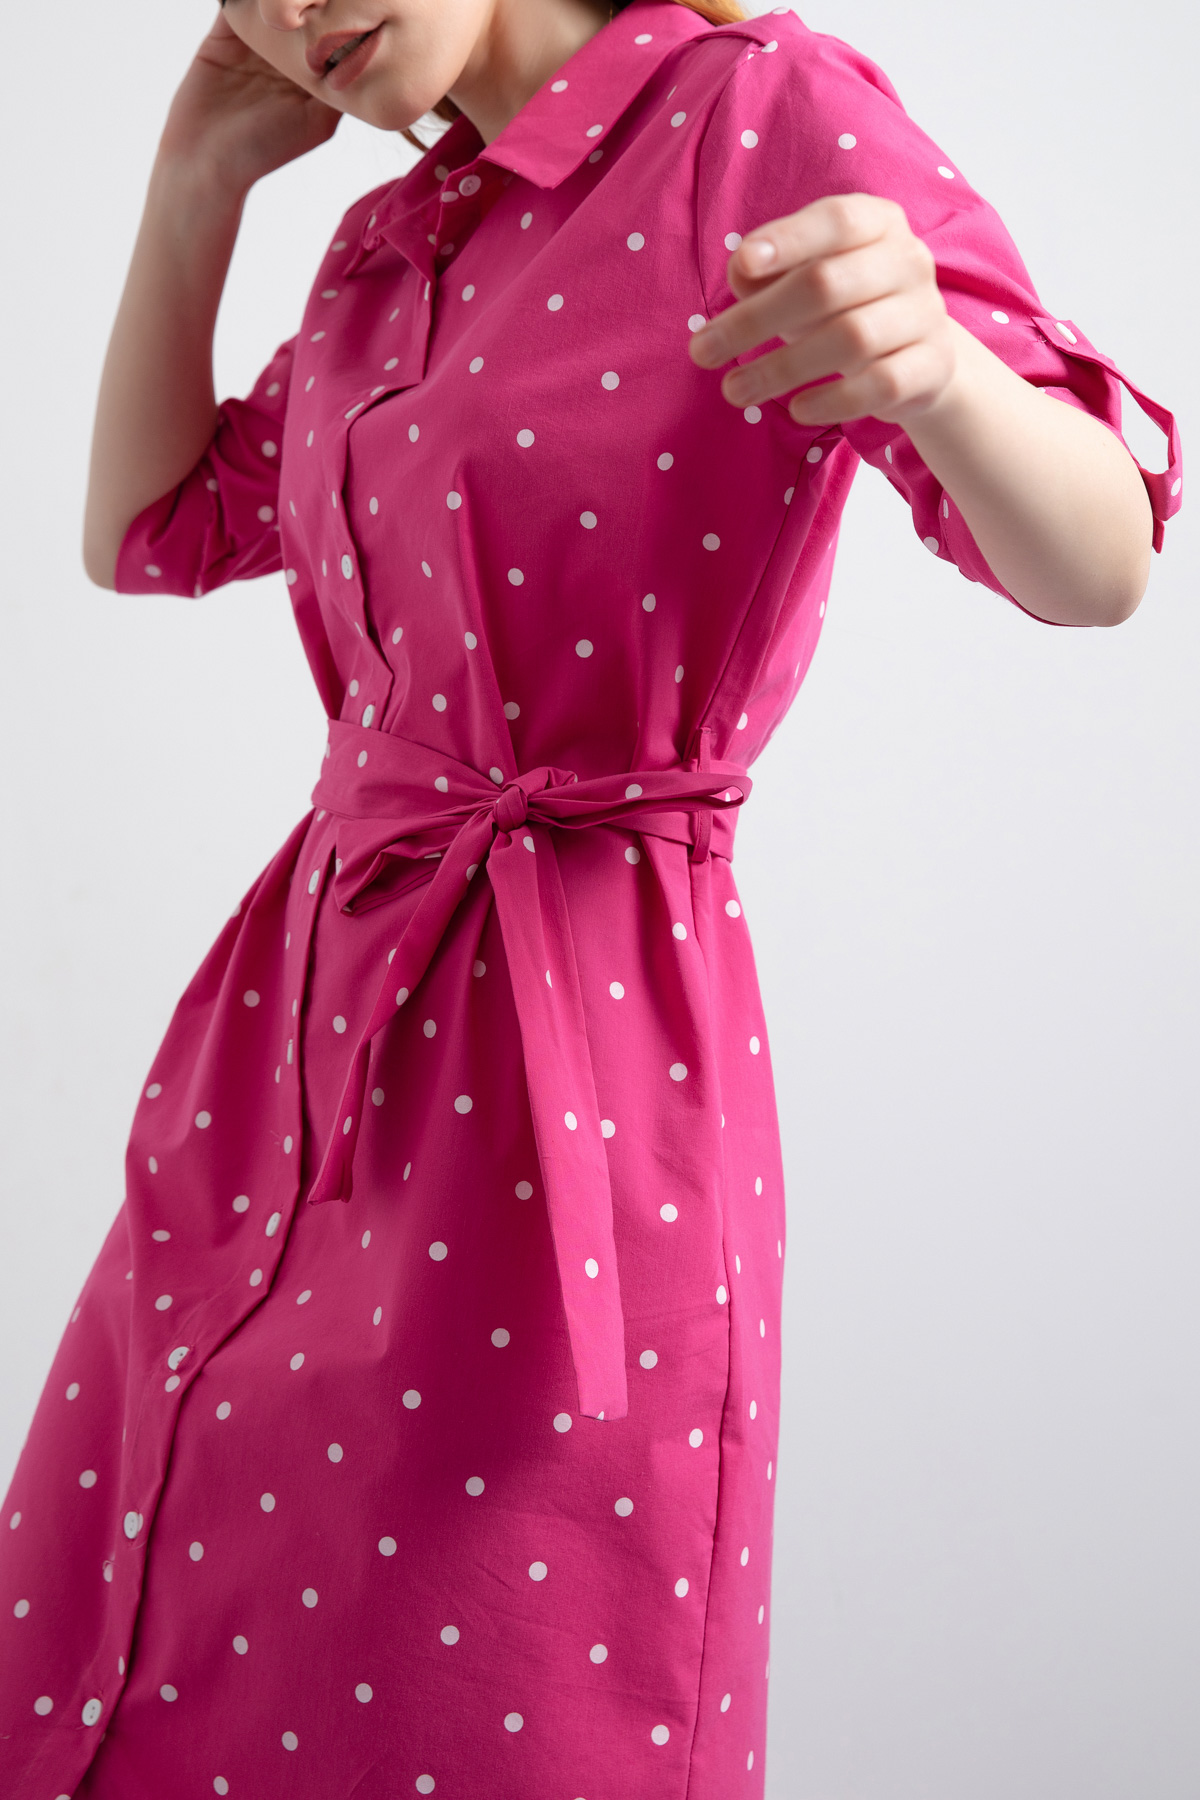 Women's Fuchsia Polka Dot Patterned Dress